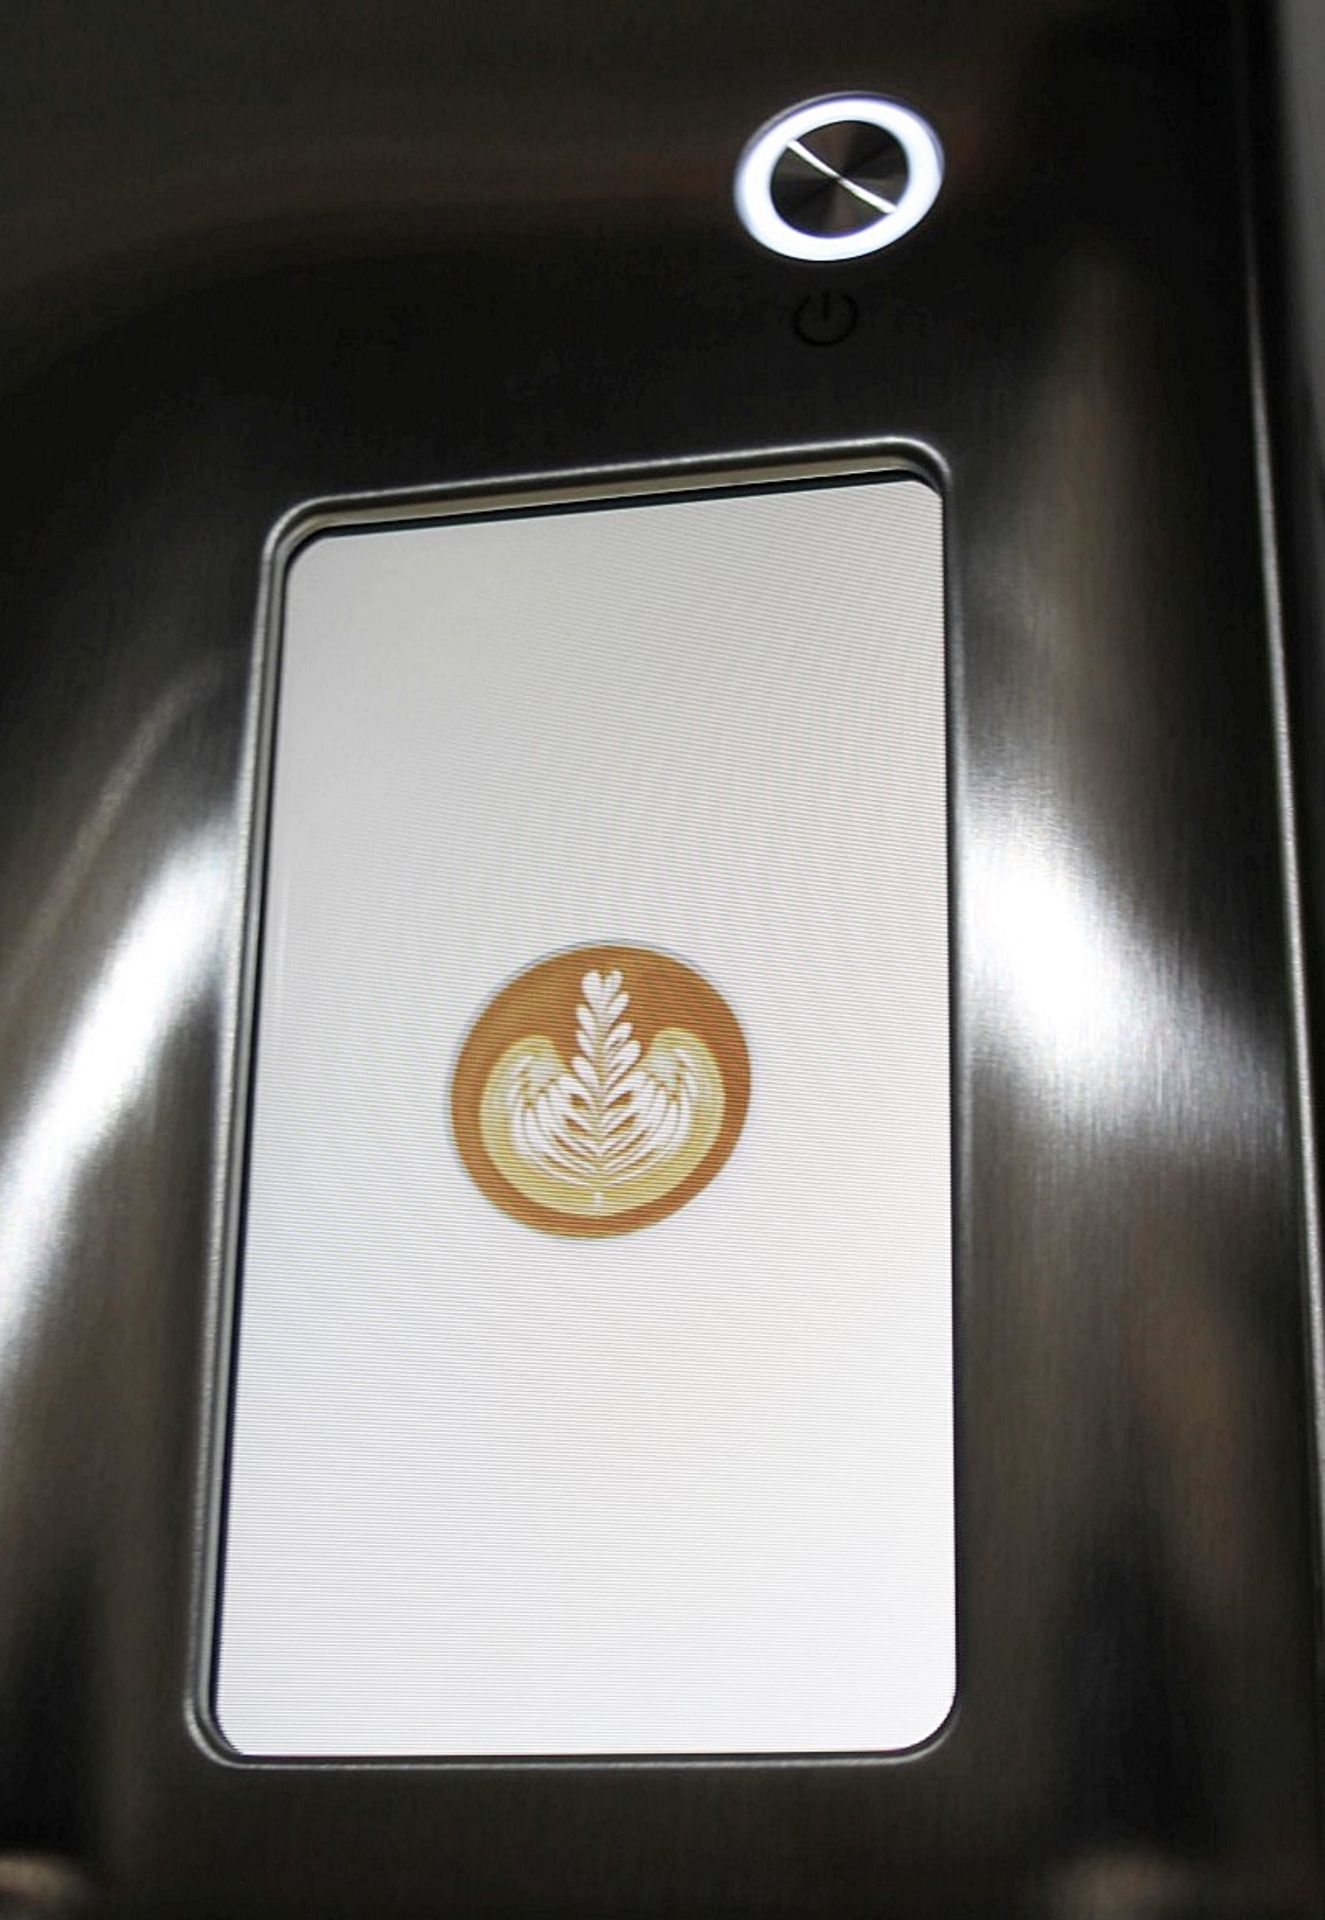 1 x SAGE Nespresso 'Creatista Pro' Automatic Coffee Machine - Original Price £679.95 - Image 20 of 23